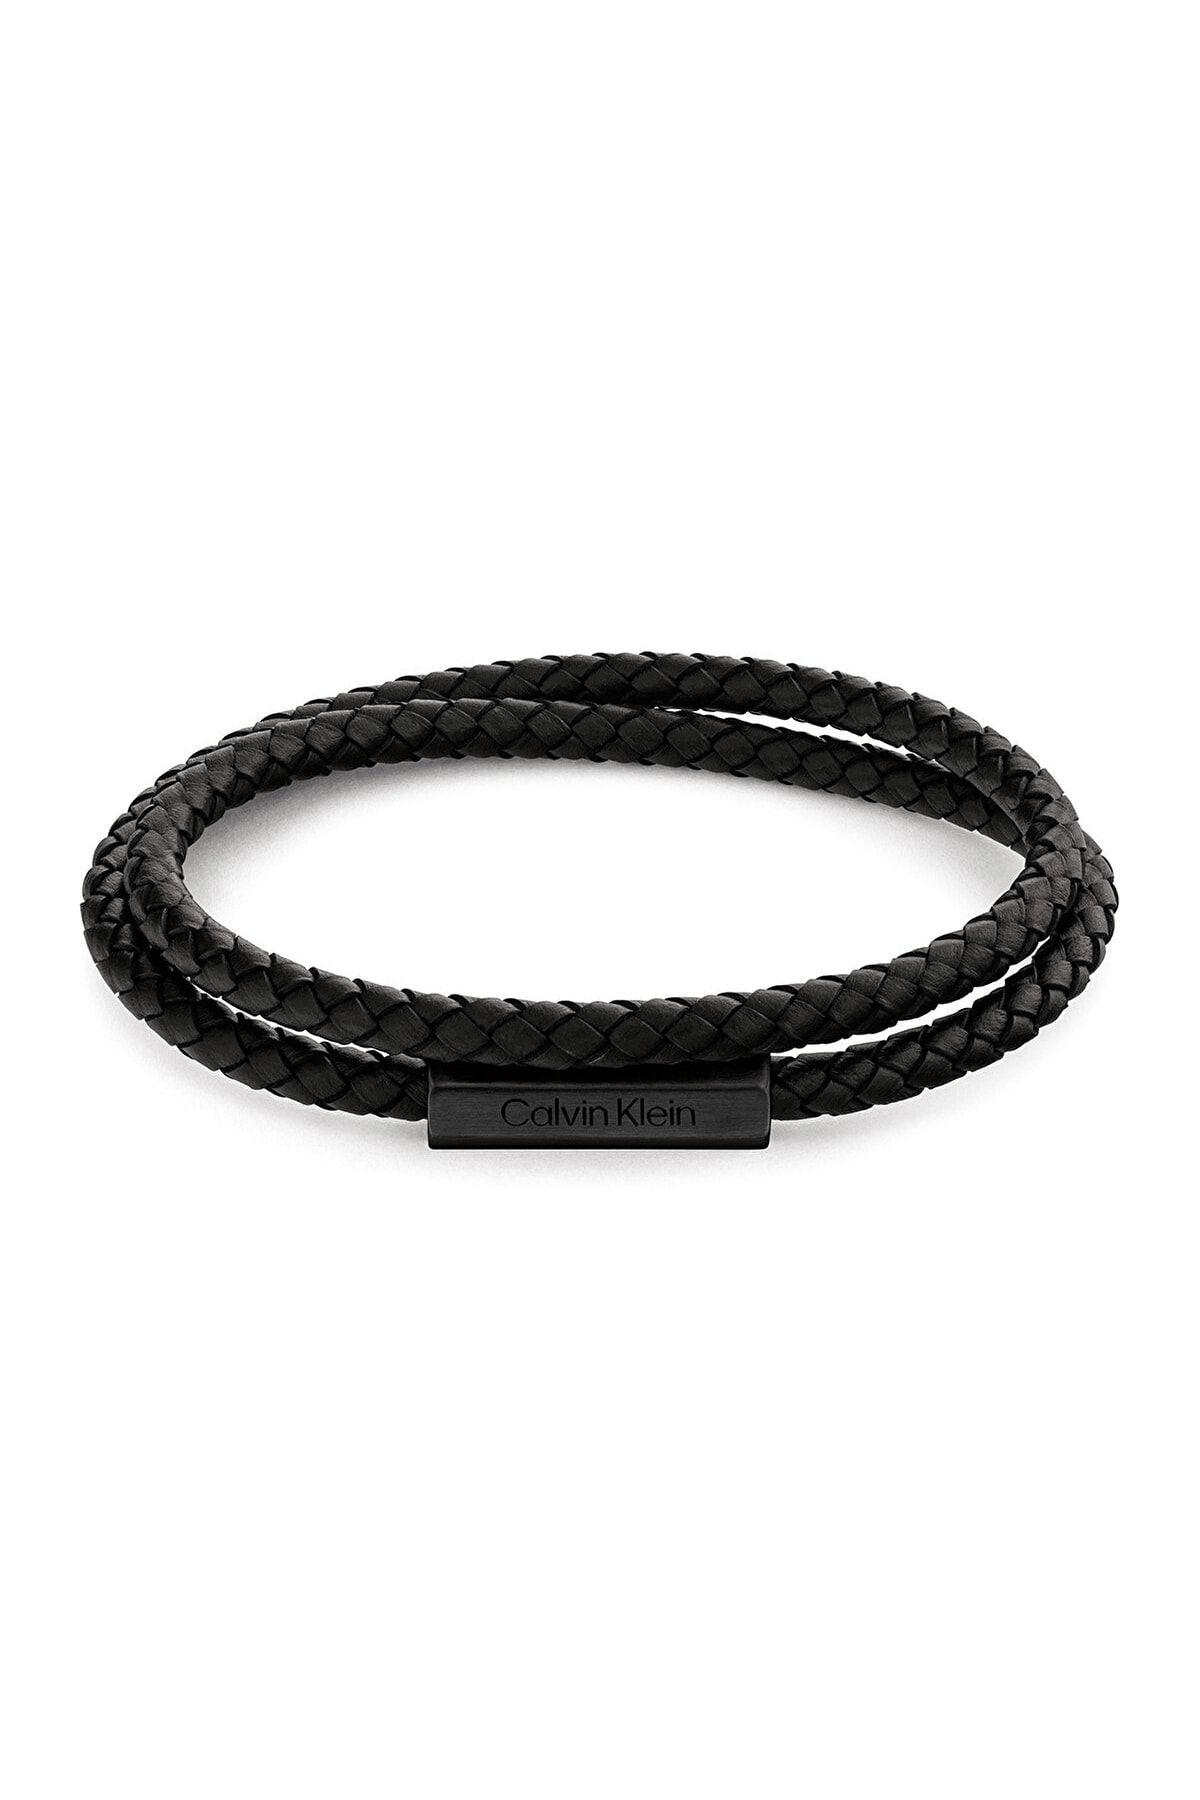 Calvin Klein Men's Black Tone Chain Style Bracelet 35000067 - First Class  Watches™ IRL